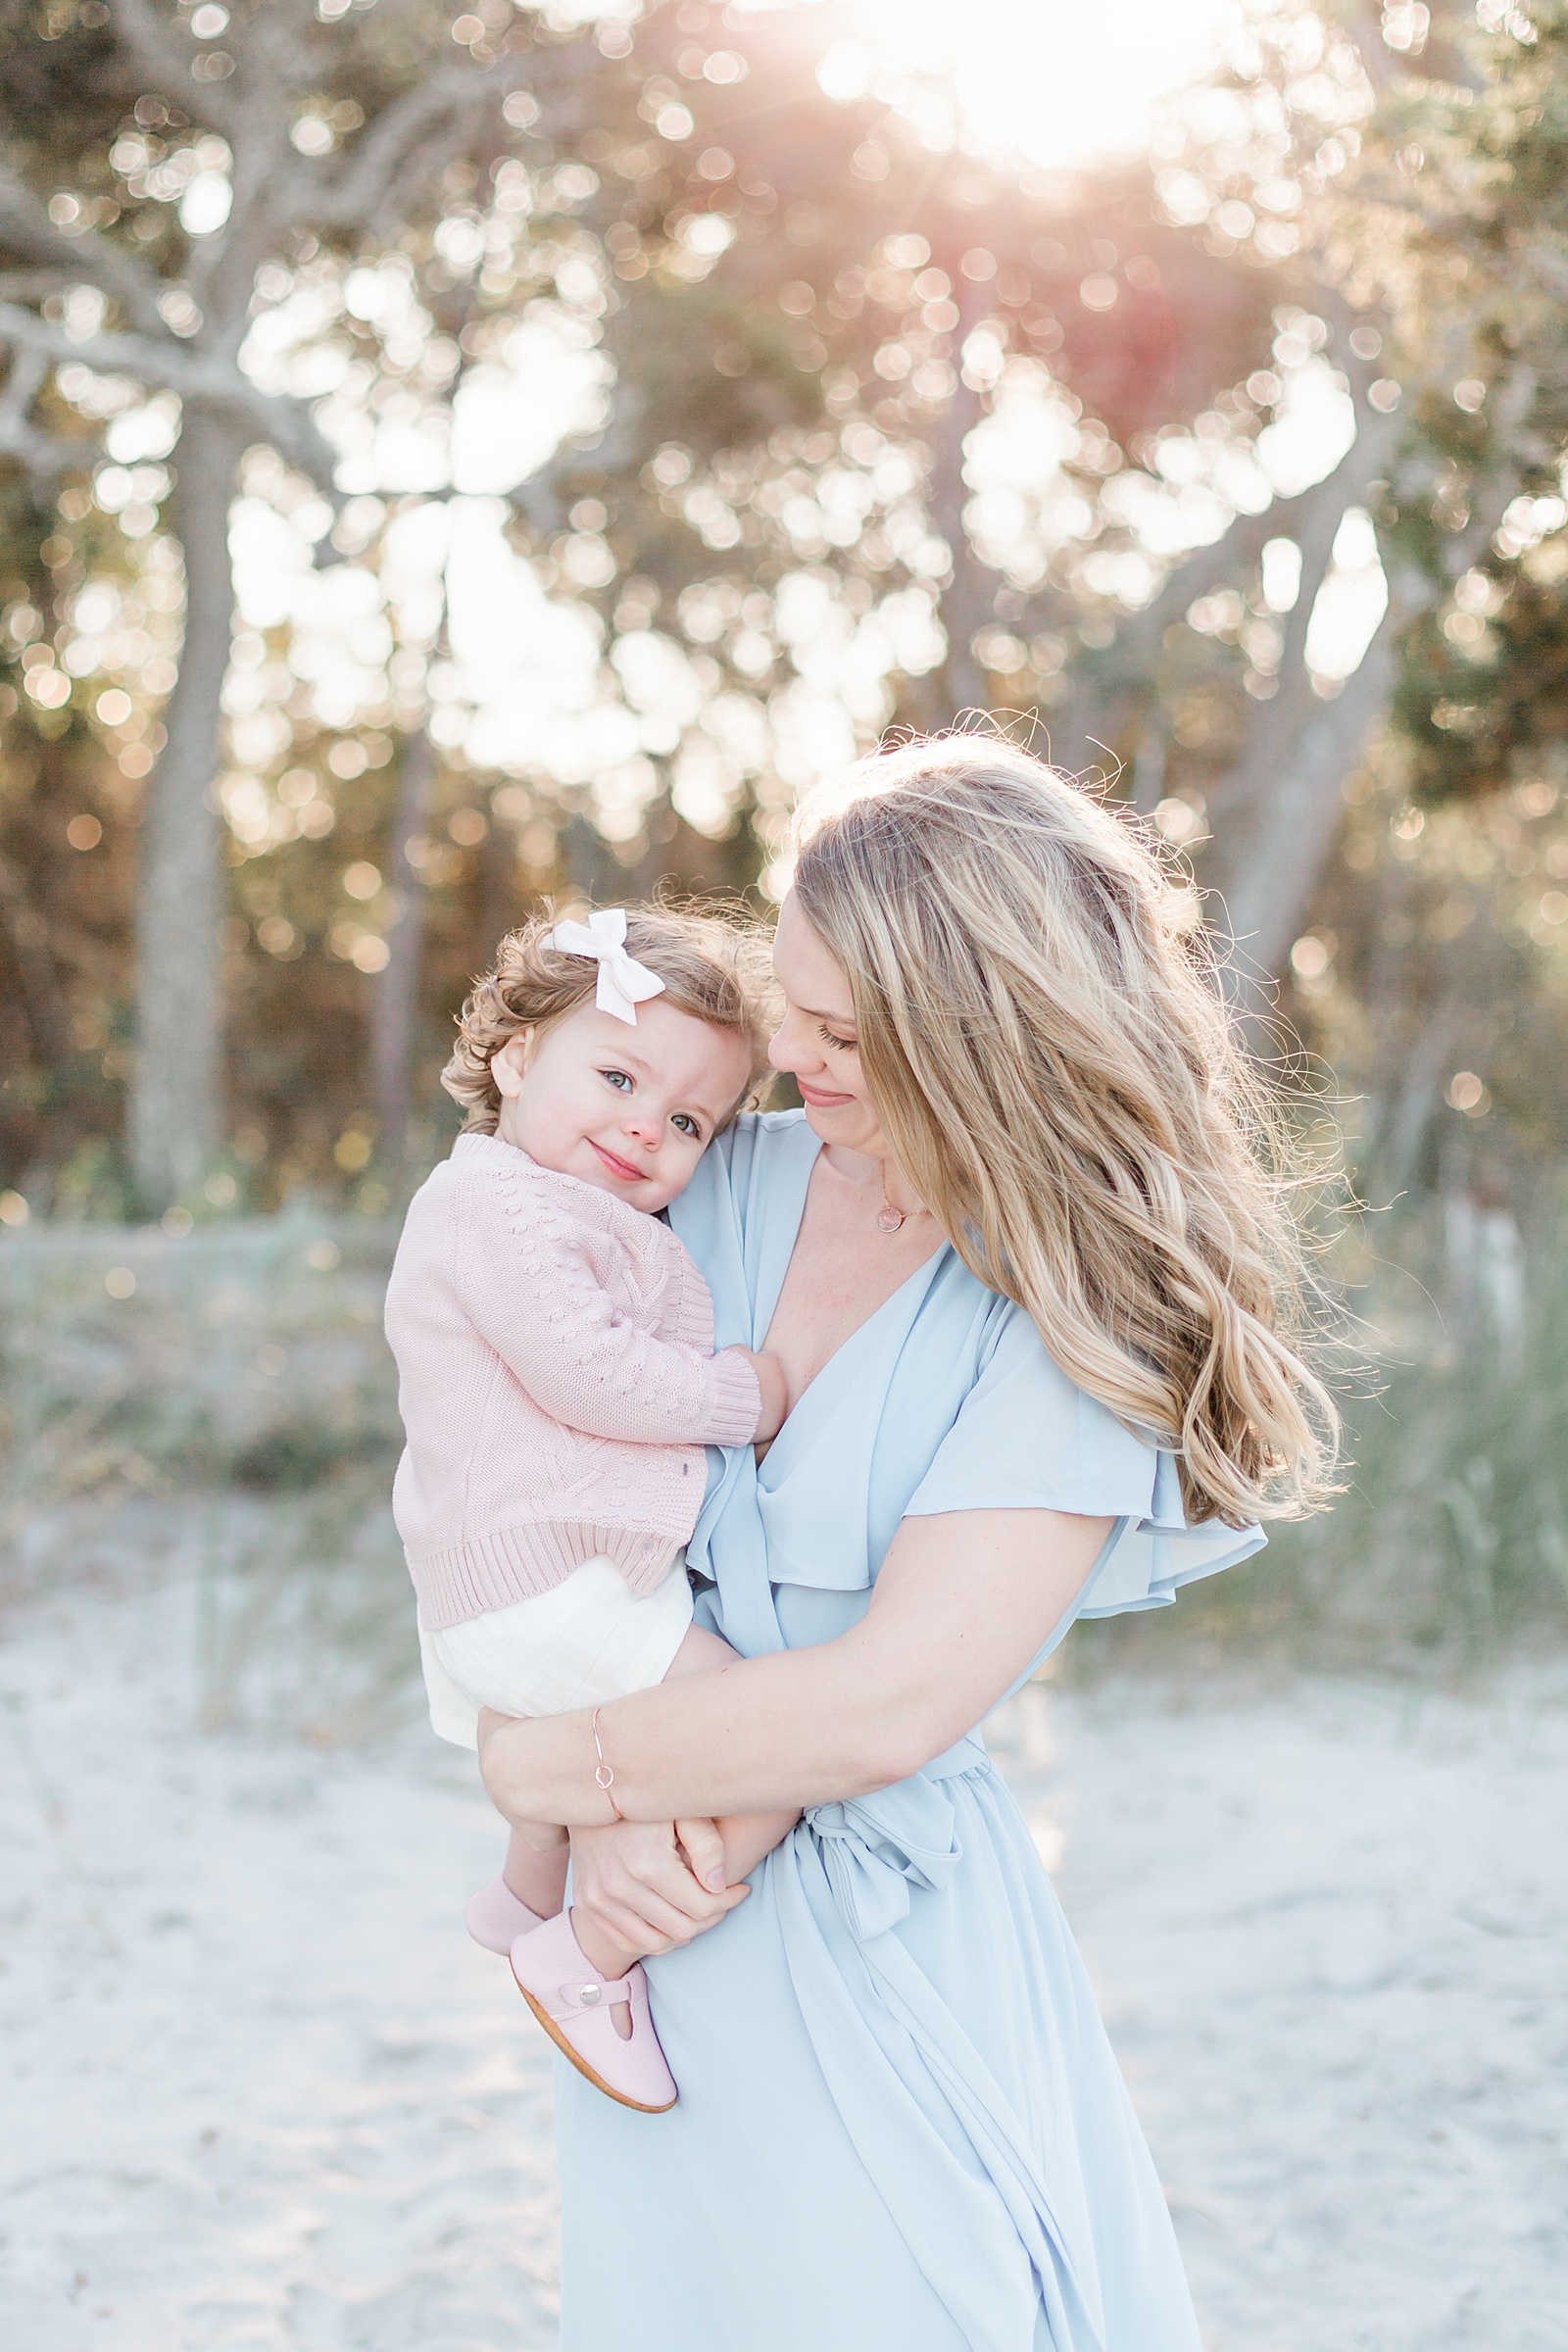 Mom and daughter at Folly Beach | Caitlyn Motycka Photography